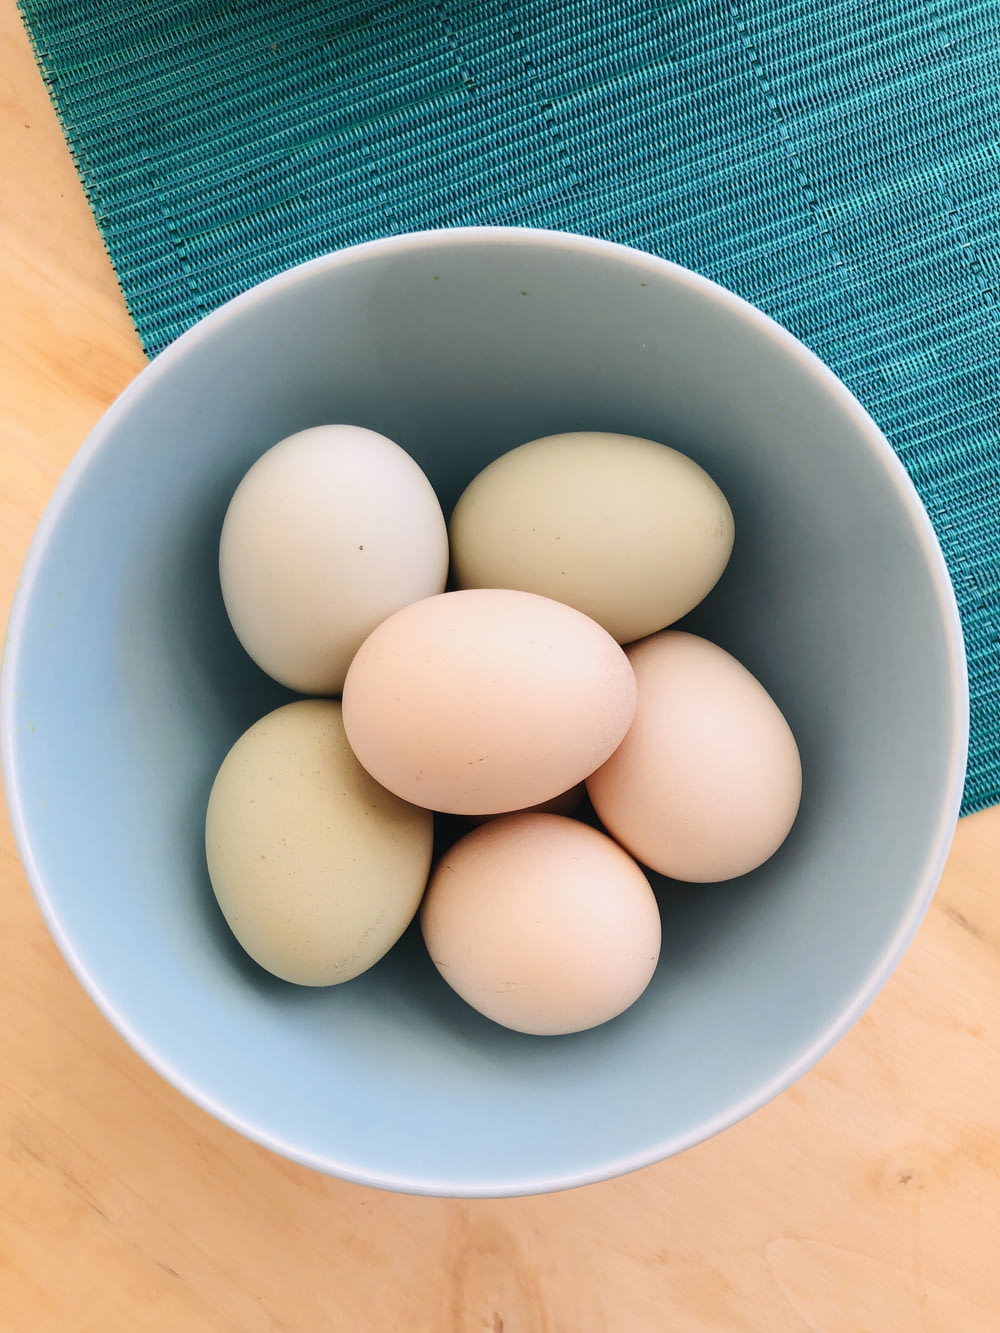 white eggs in blue ceramic bowl